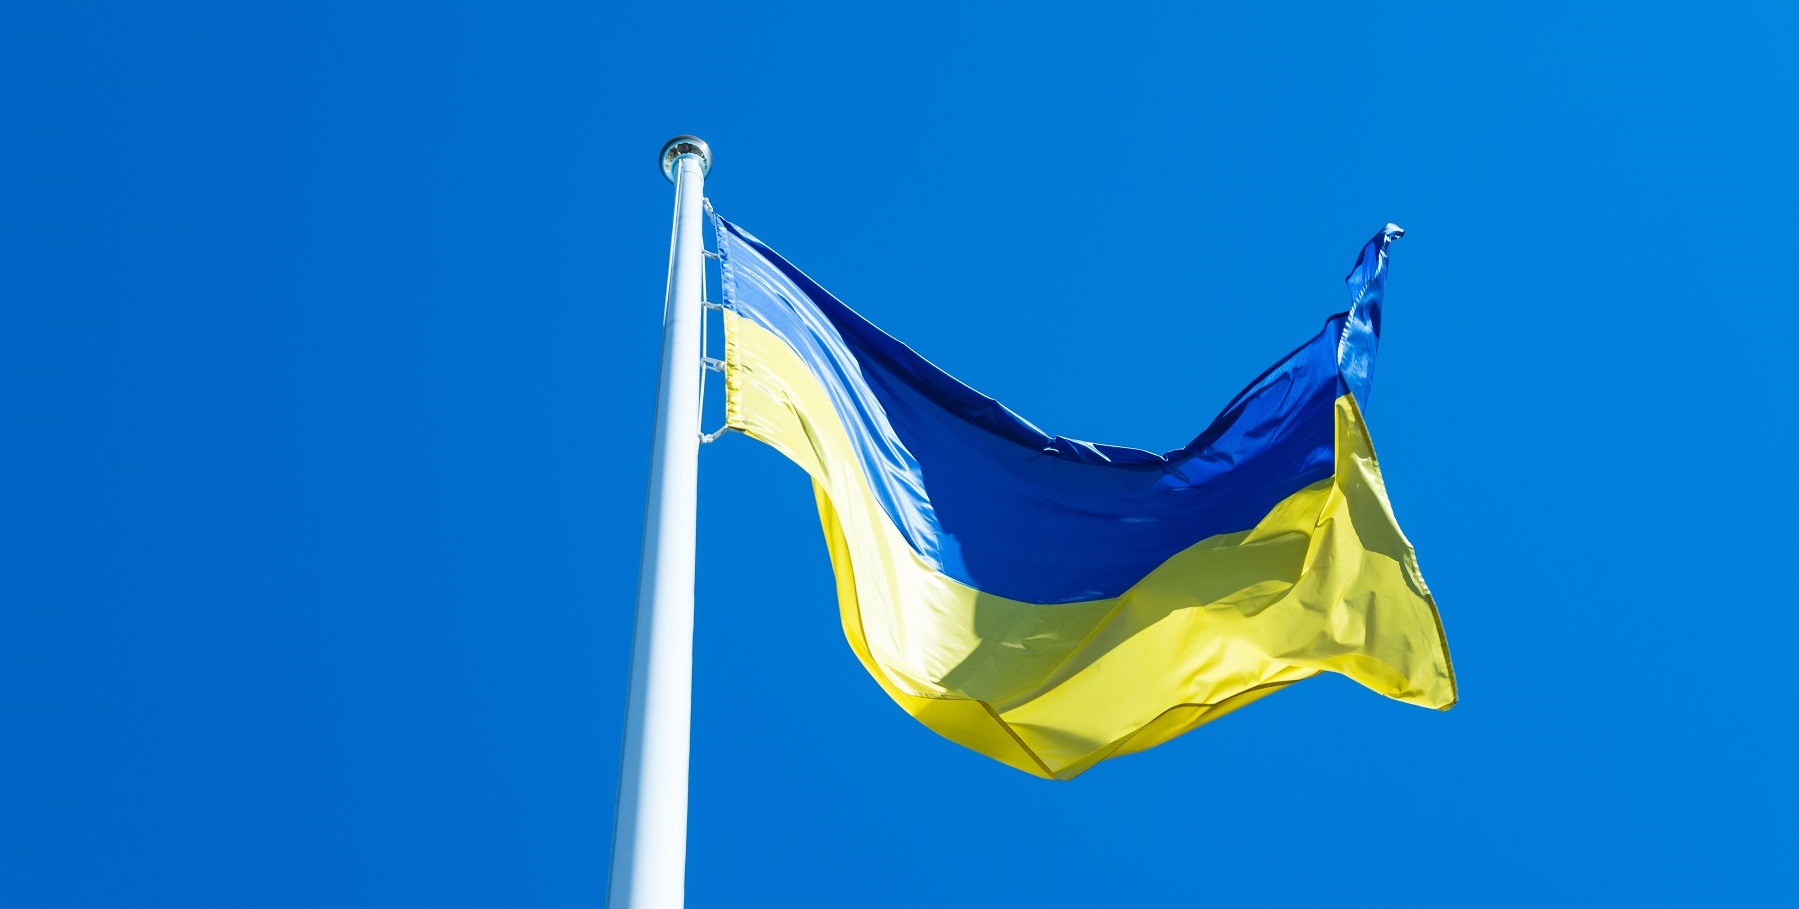 ukrainian flag flagpole waving wind against blue sky background 3